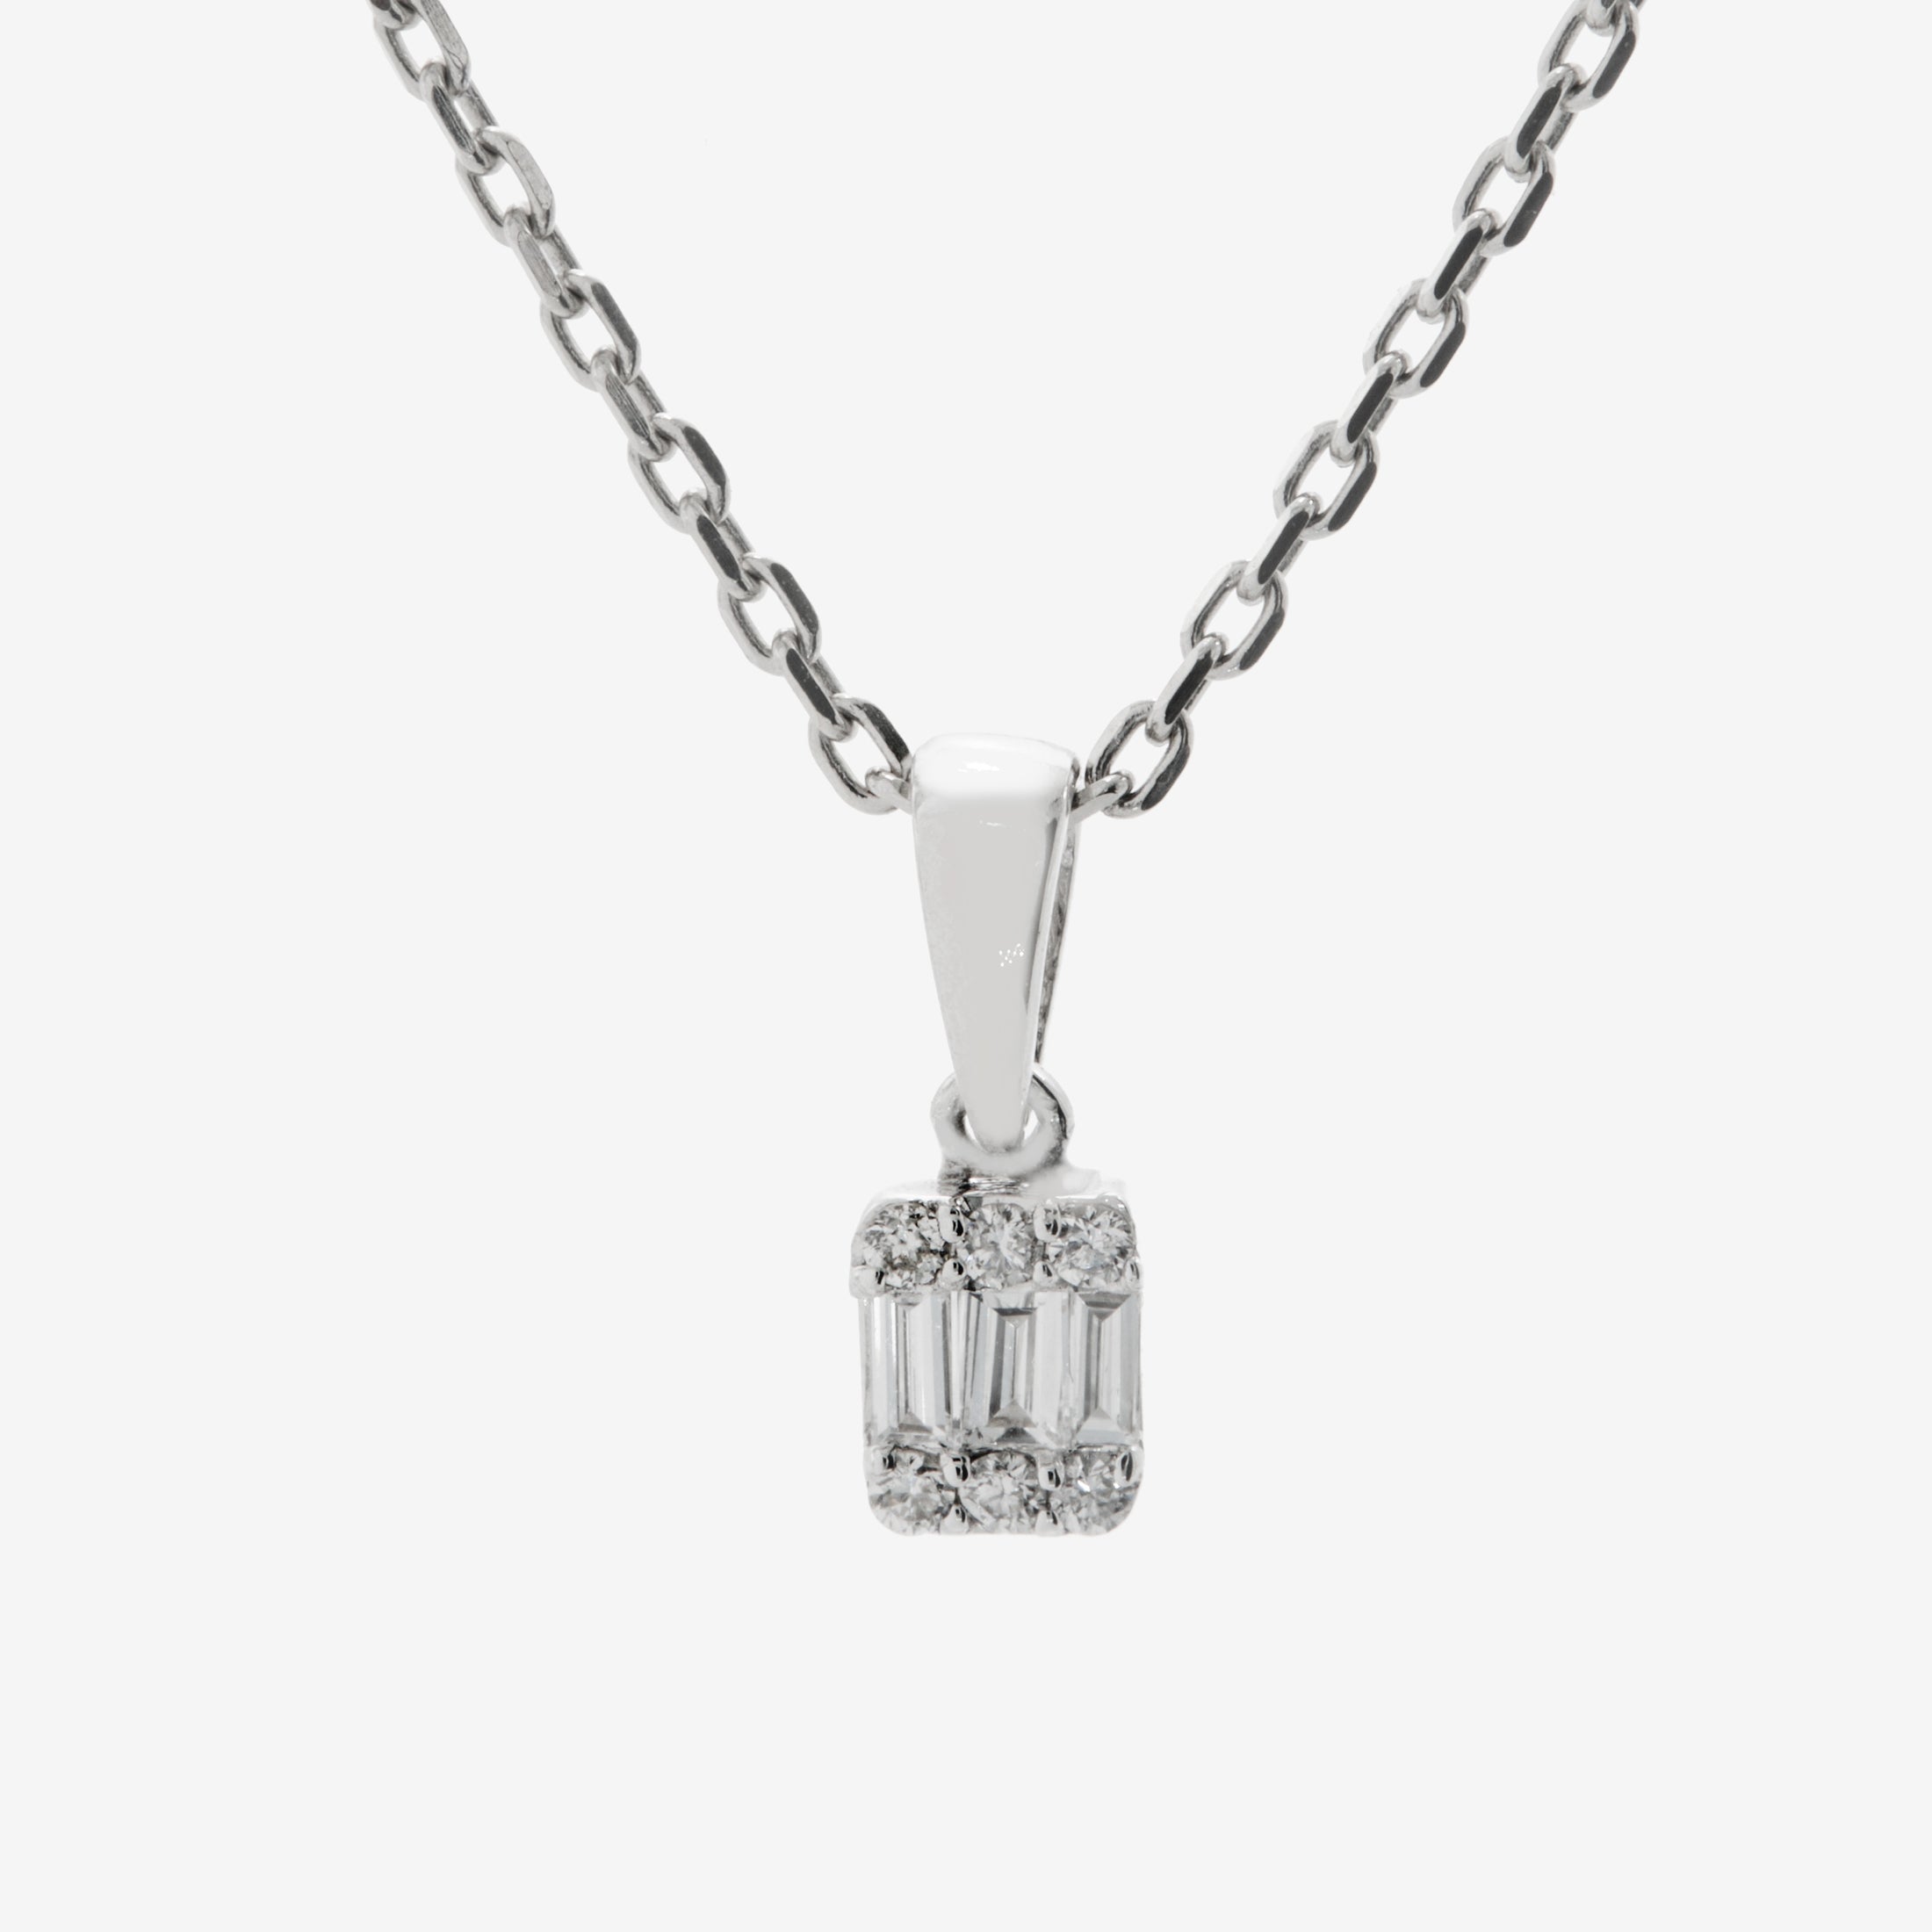 Fateh necklace with diamonds